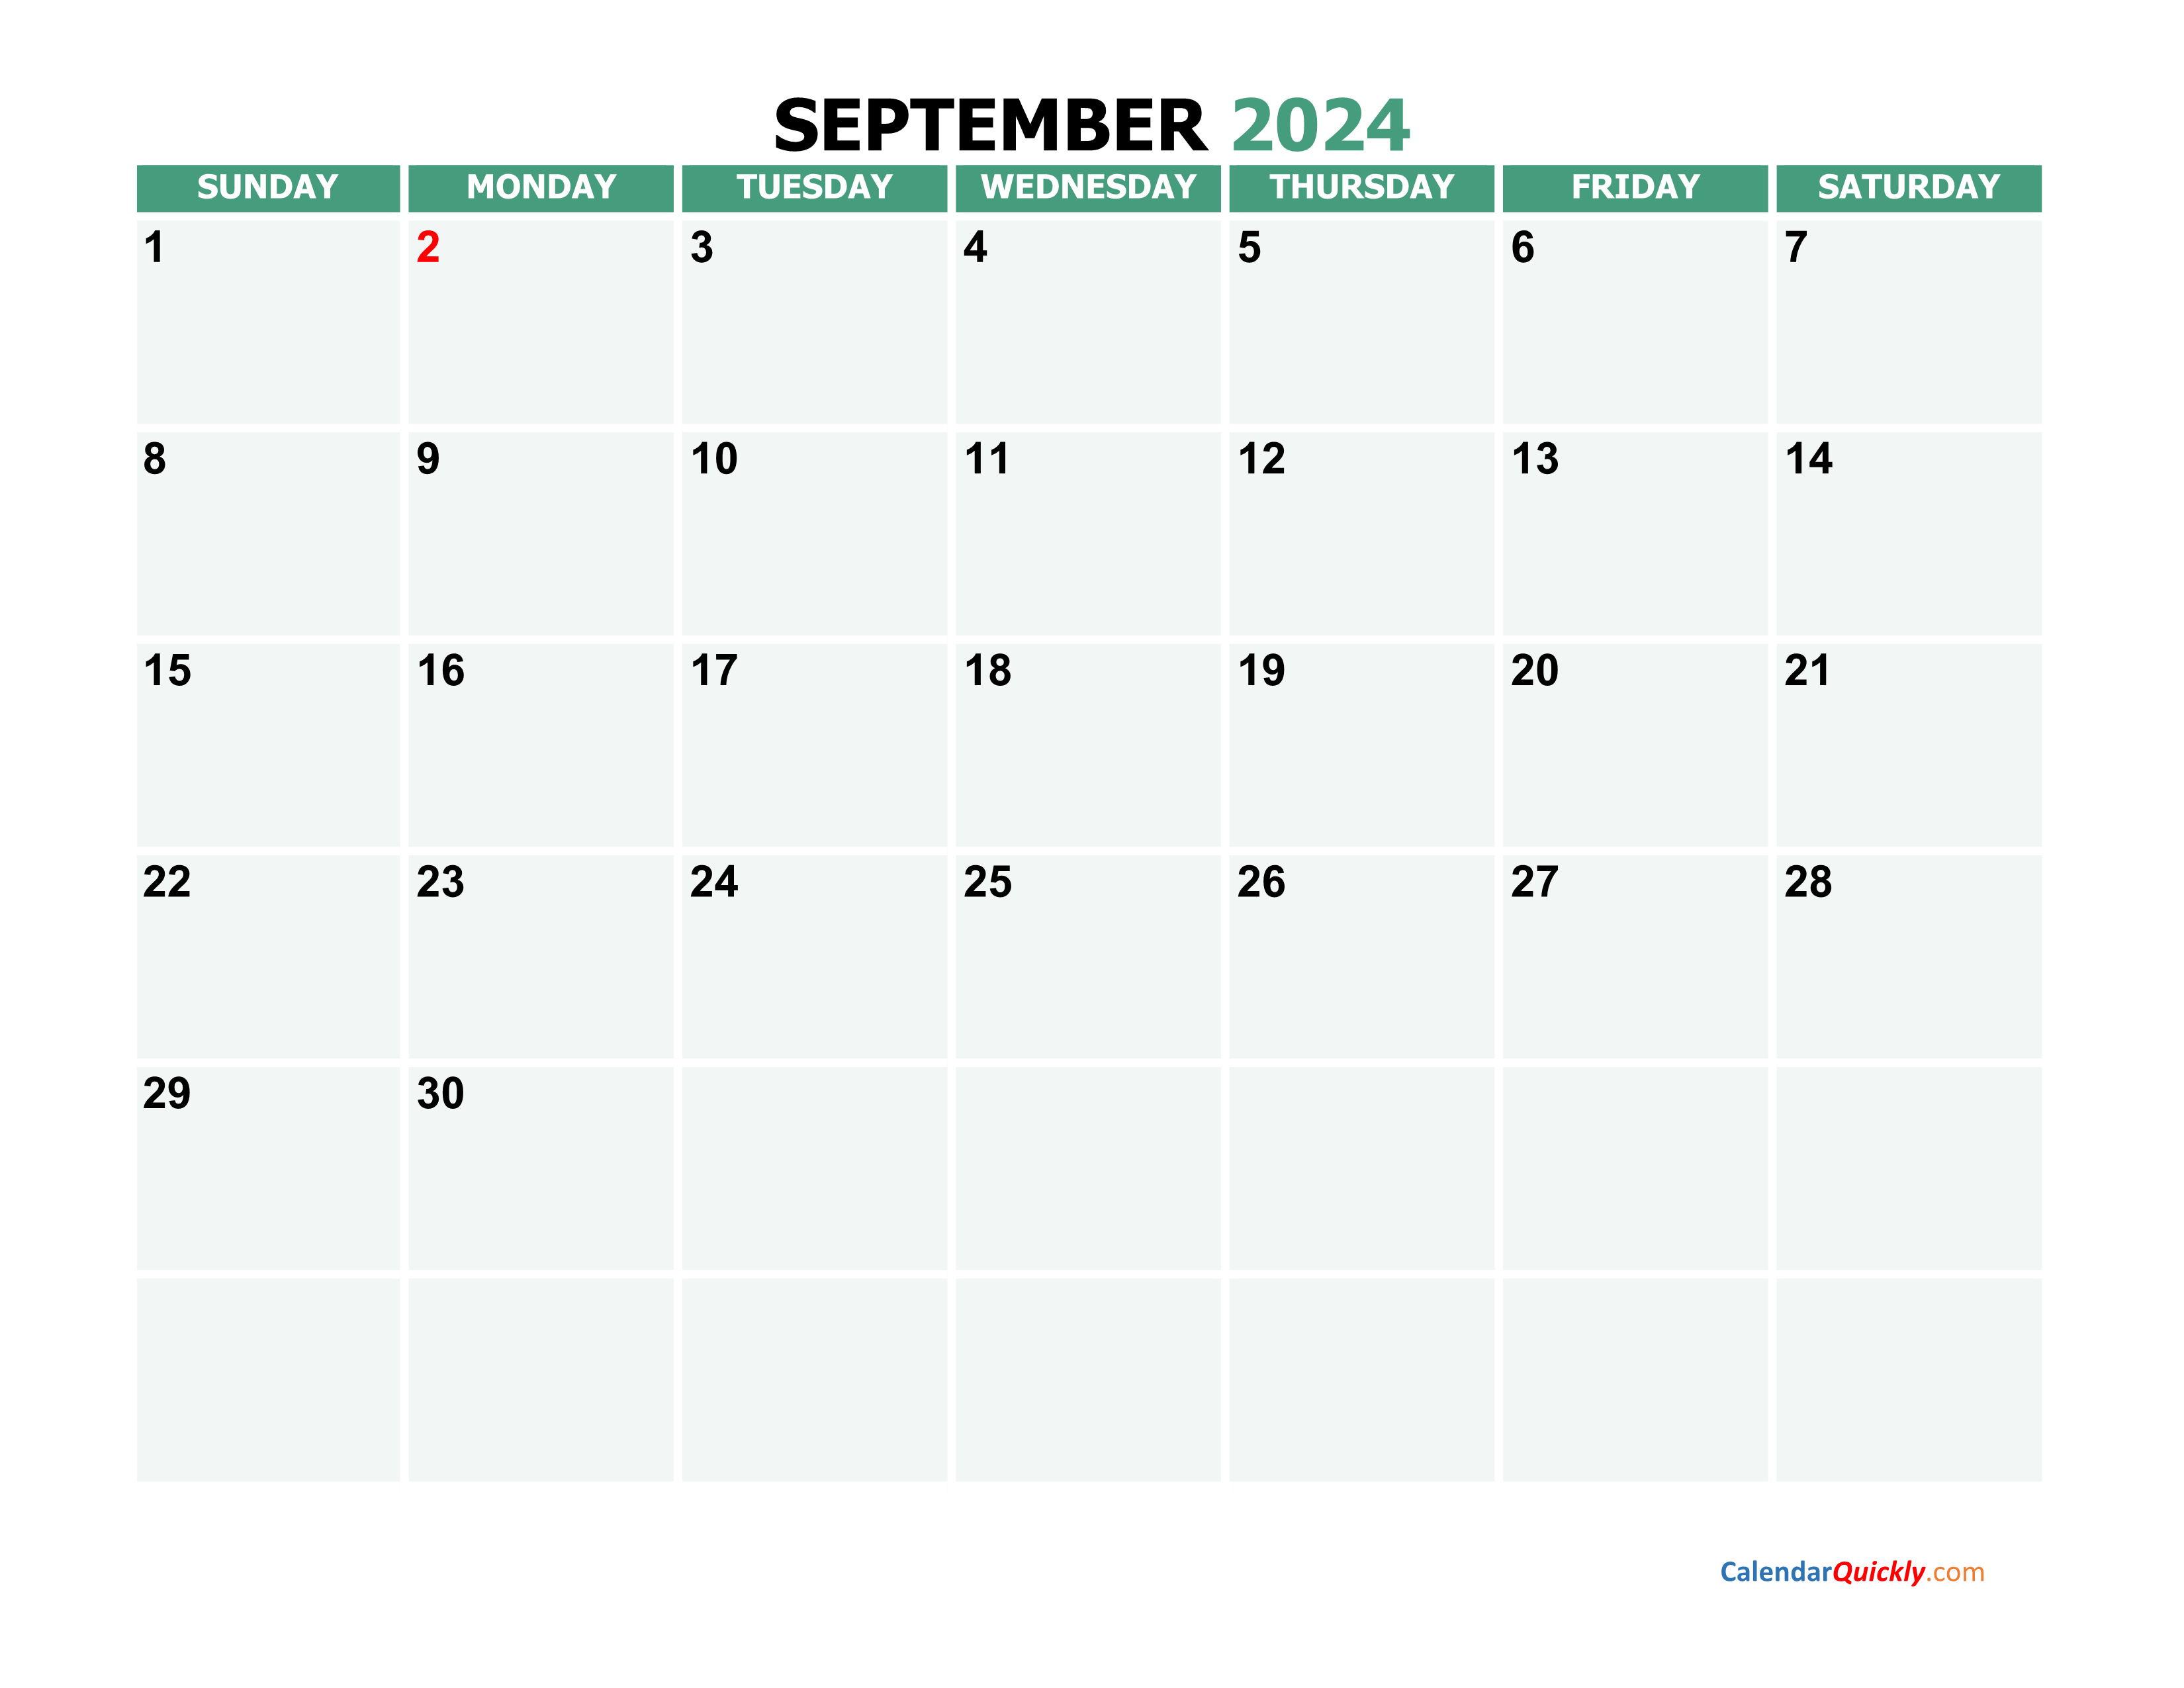 Calendar September 2024 Printable Free Calendar 2024 All Holidays - Free Printable 2024 Monthly Calendar September